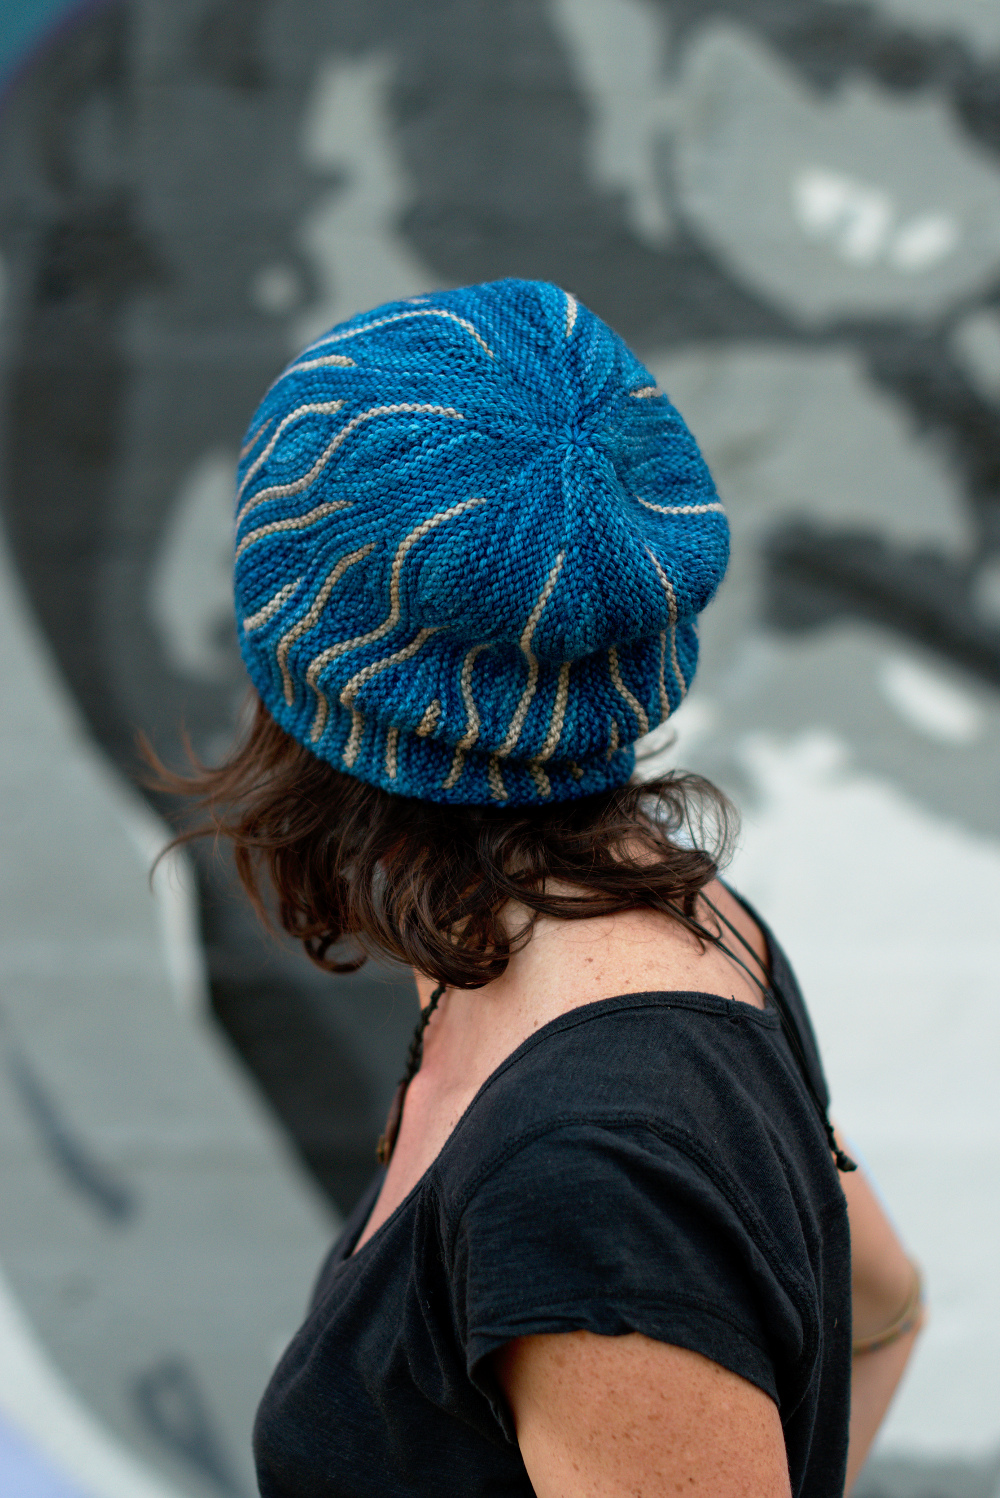 Katara sideways knit short row colourwork hat knitting pattern